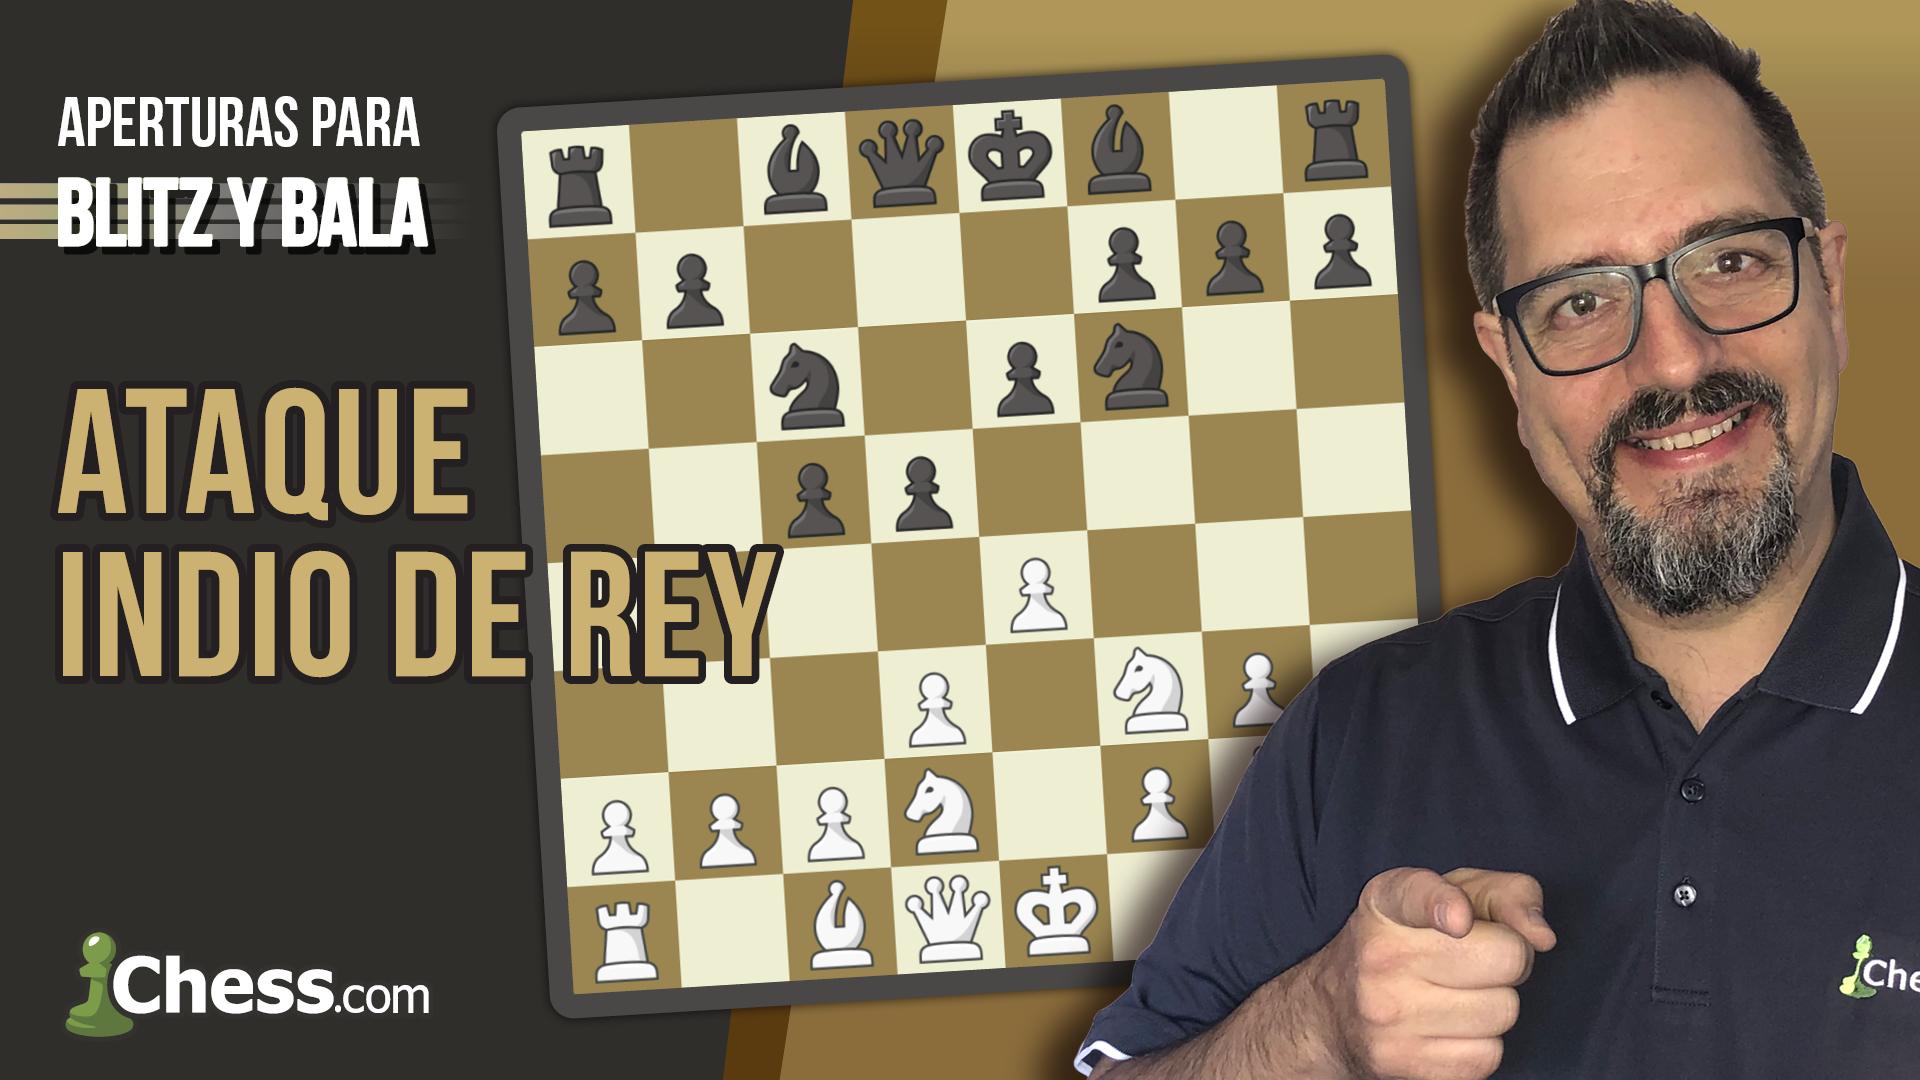 Ataque Indio de Rey | Aperturas de ajedrez Blitz y Bala - Chess.com